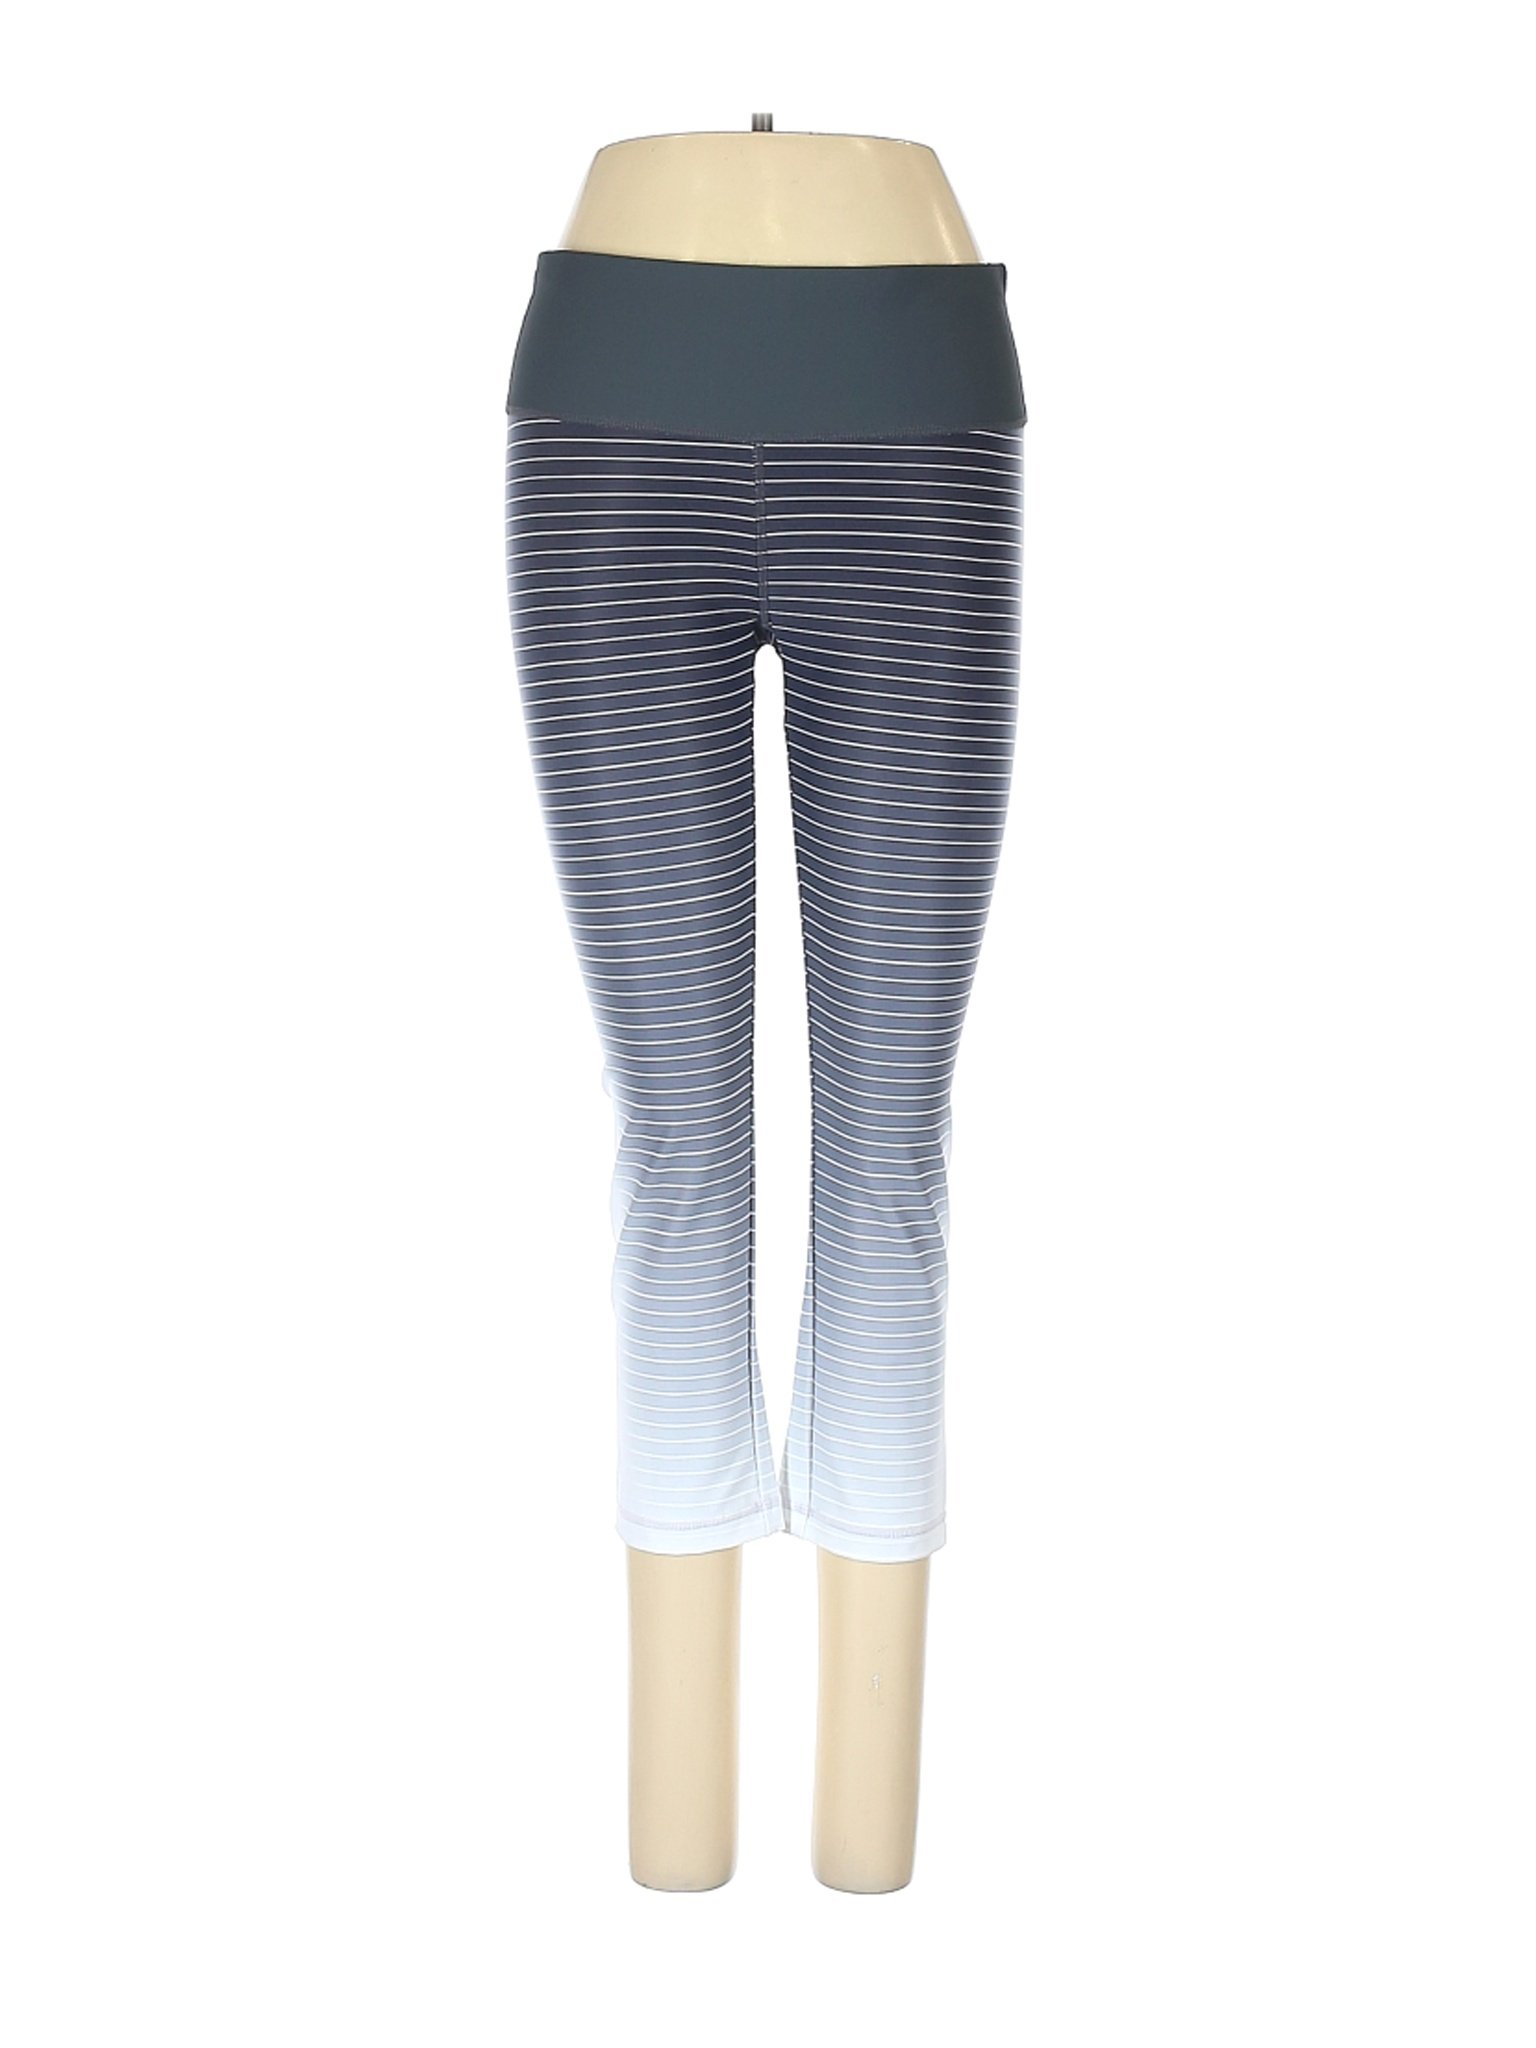 Gap Fit Women Gray Active Pants S | eBay